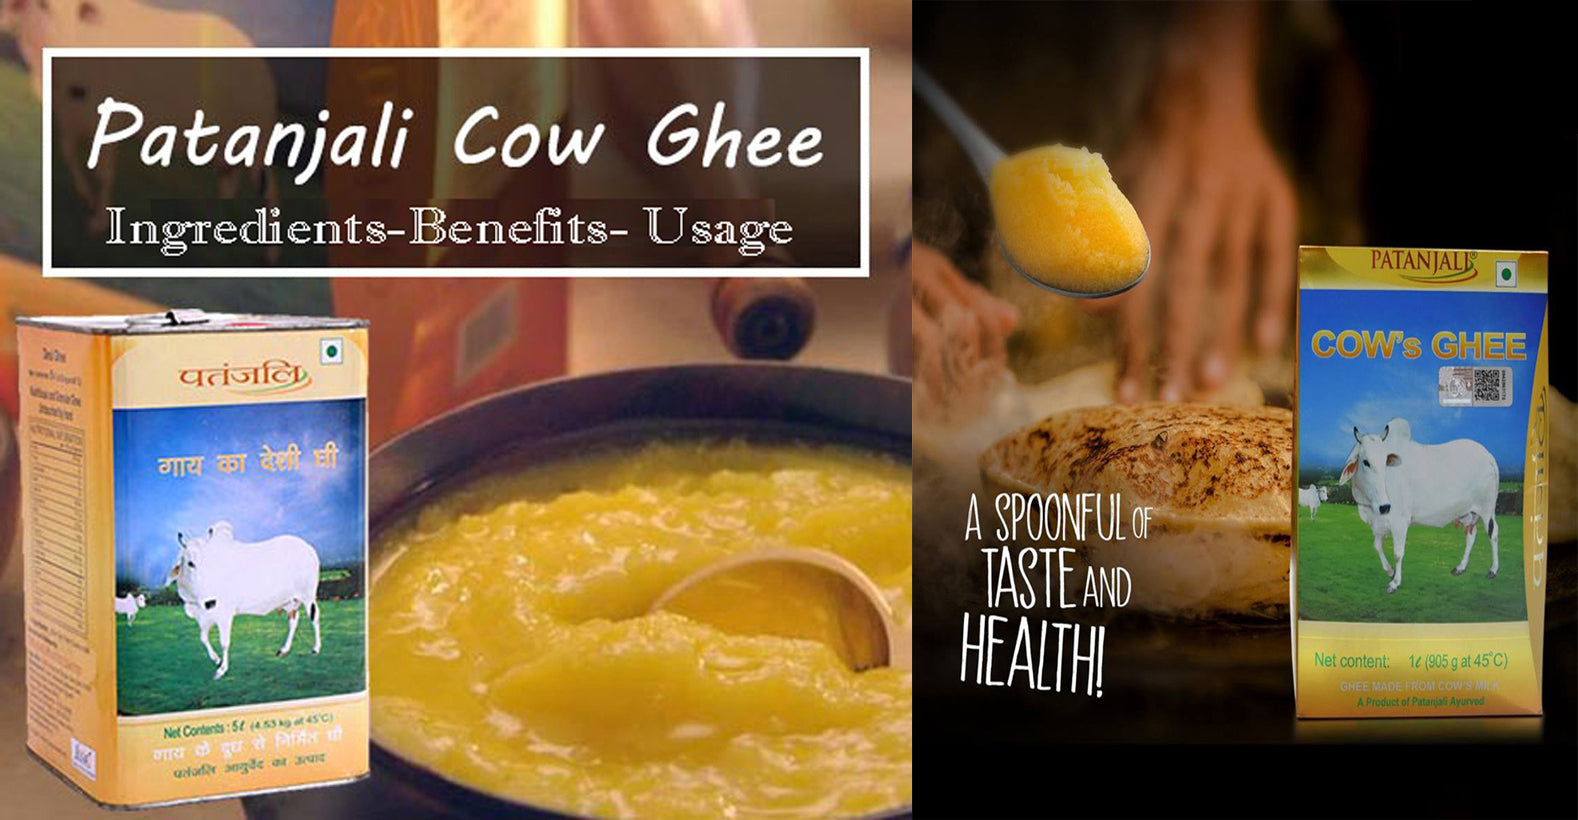 Patanjali Cow’s Ghee - Ingredients, Benefits, Usage